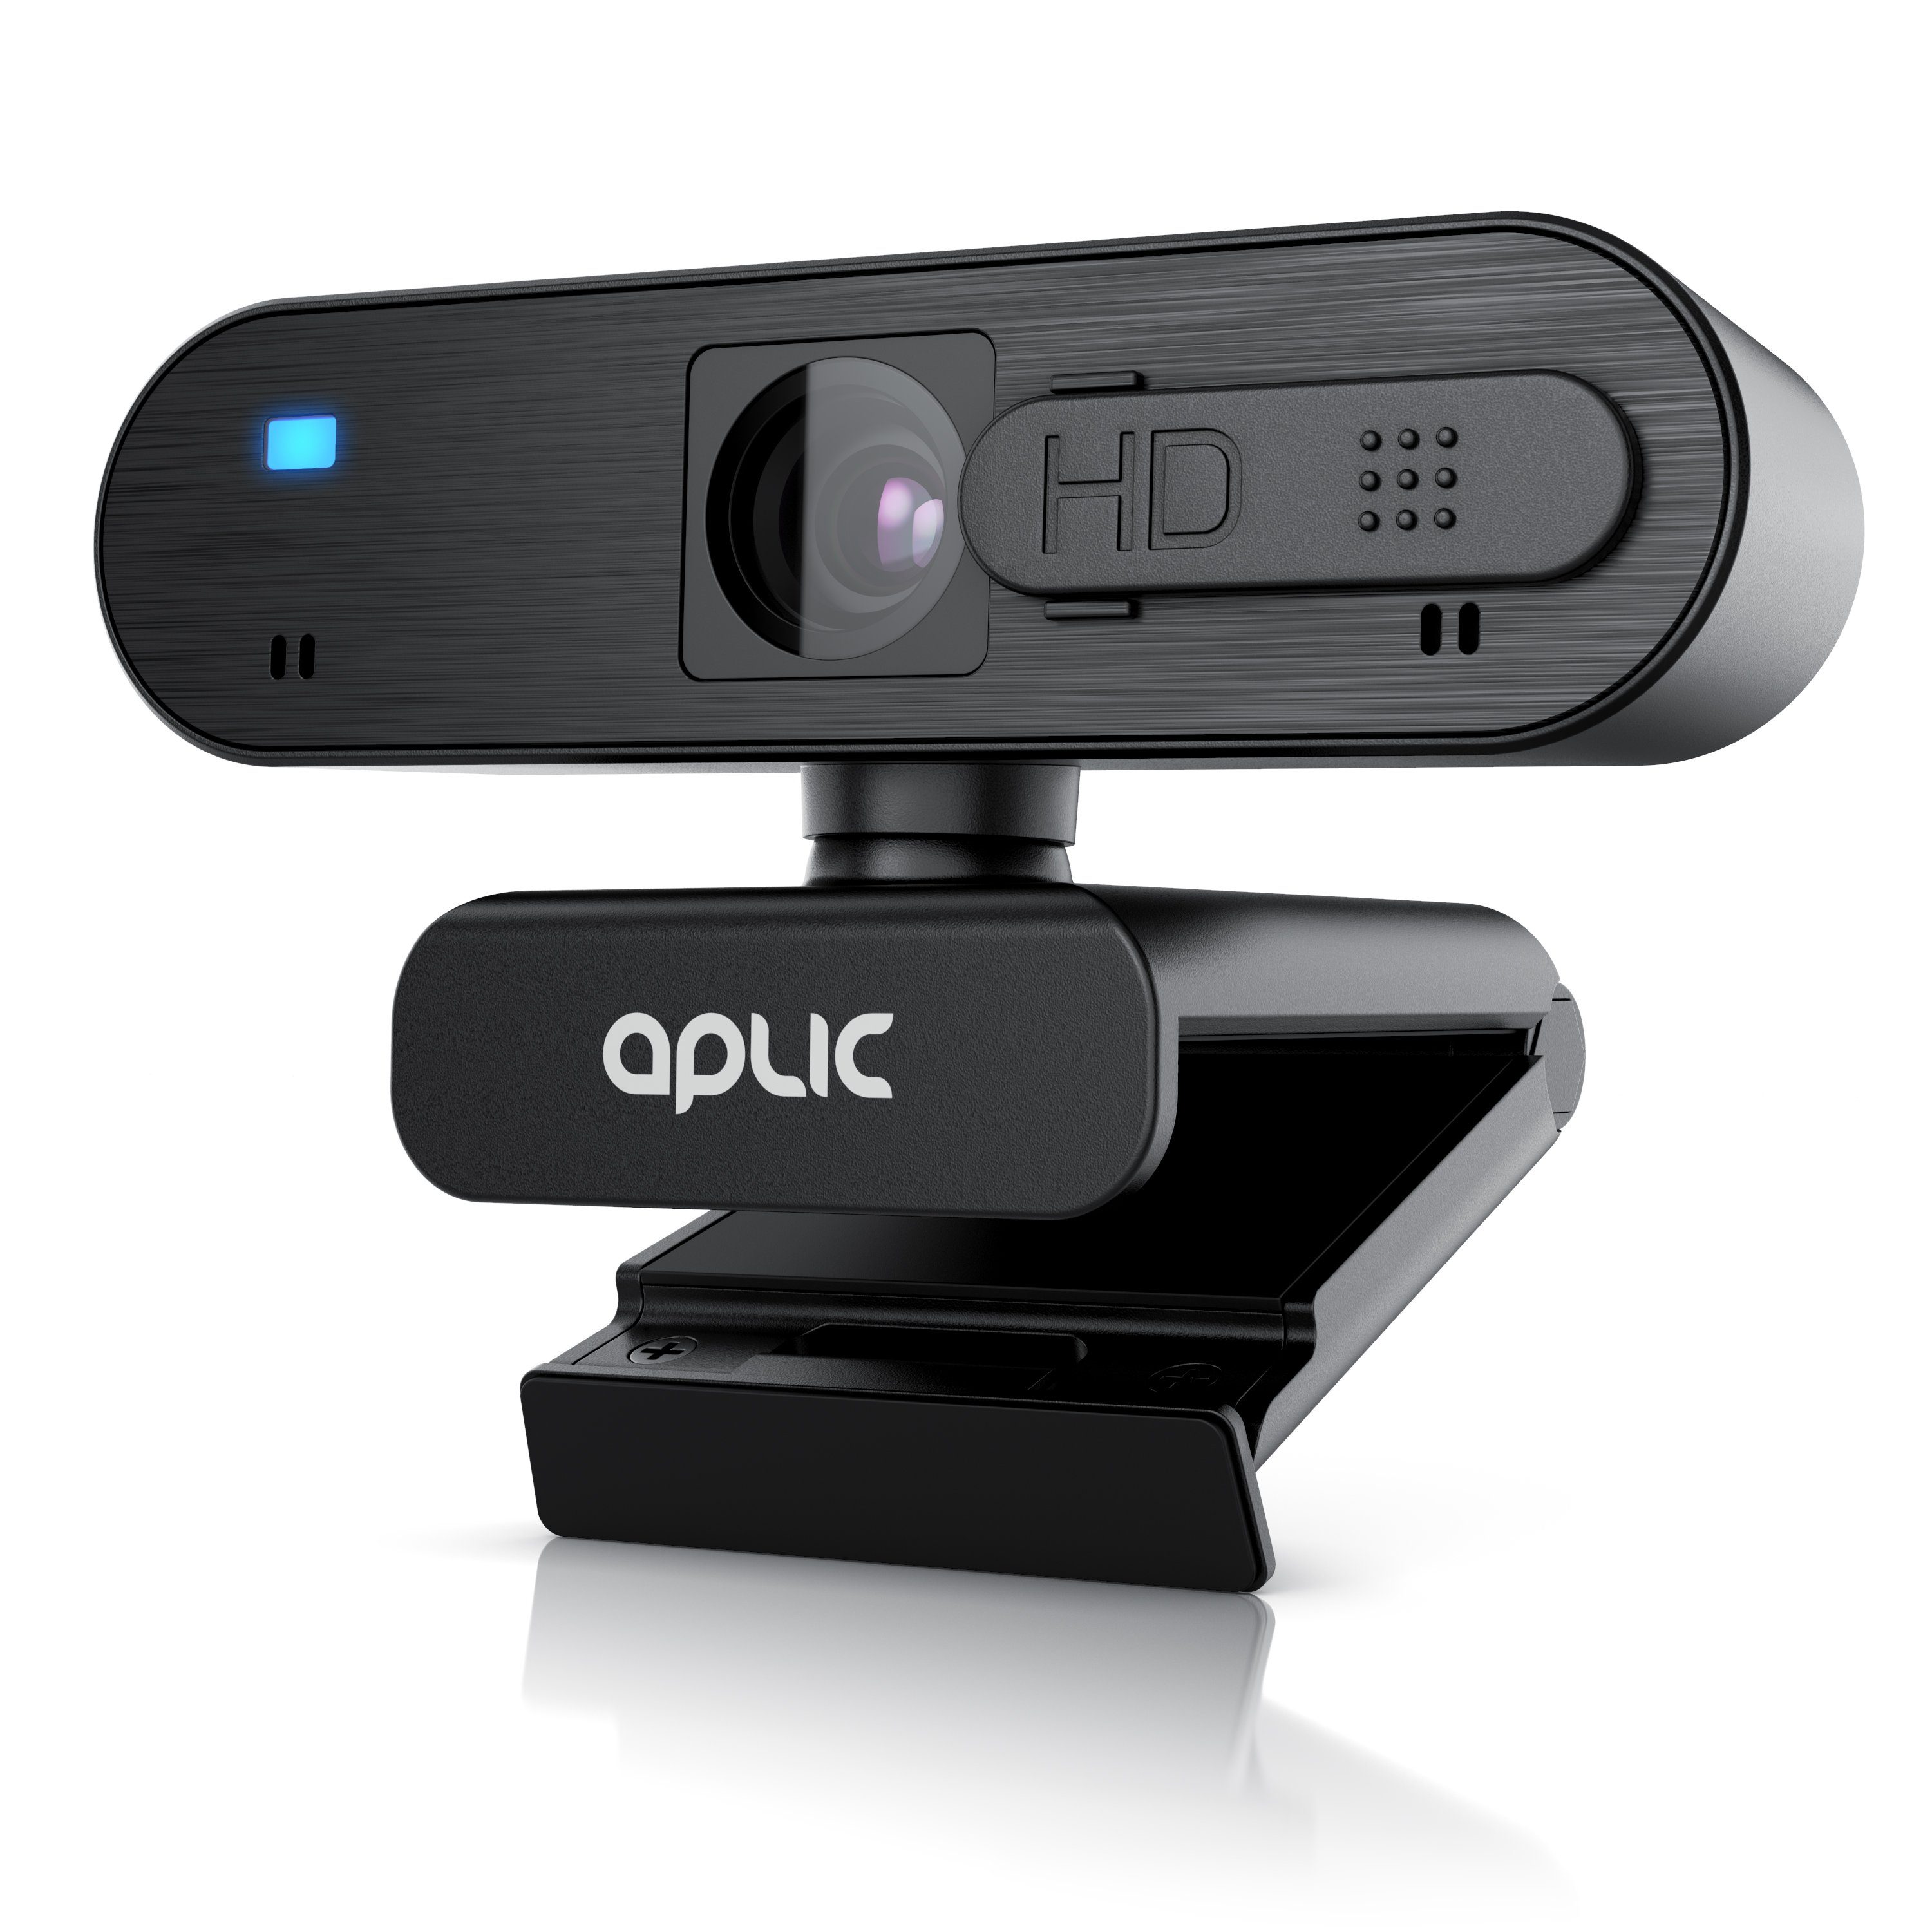 Aplic Full HD-Webcam (Full Shutter Stereomikrofon) Privacy HD, Autofokus, Sichtschutz, 1920x1080@30Hz, schwarz1